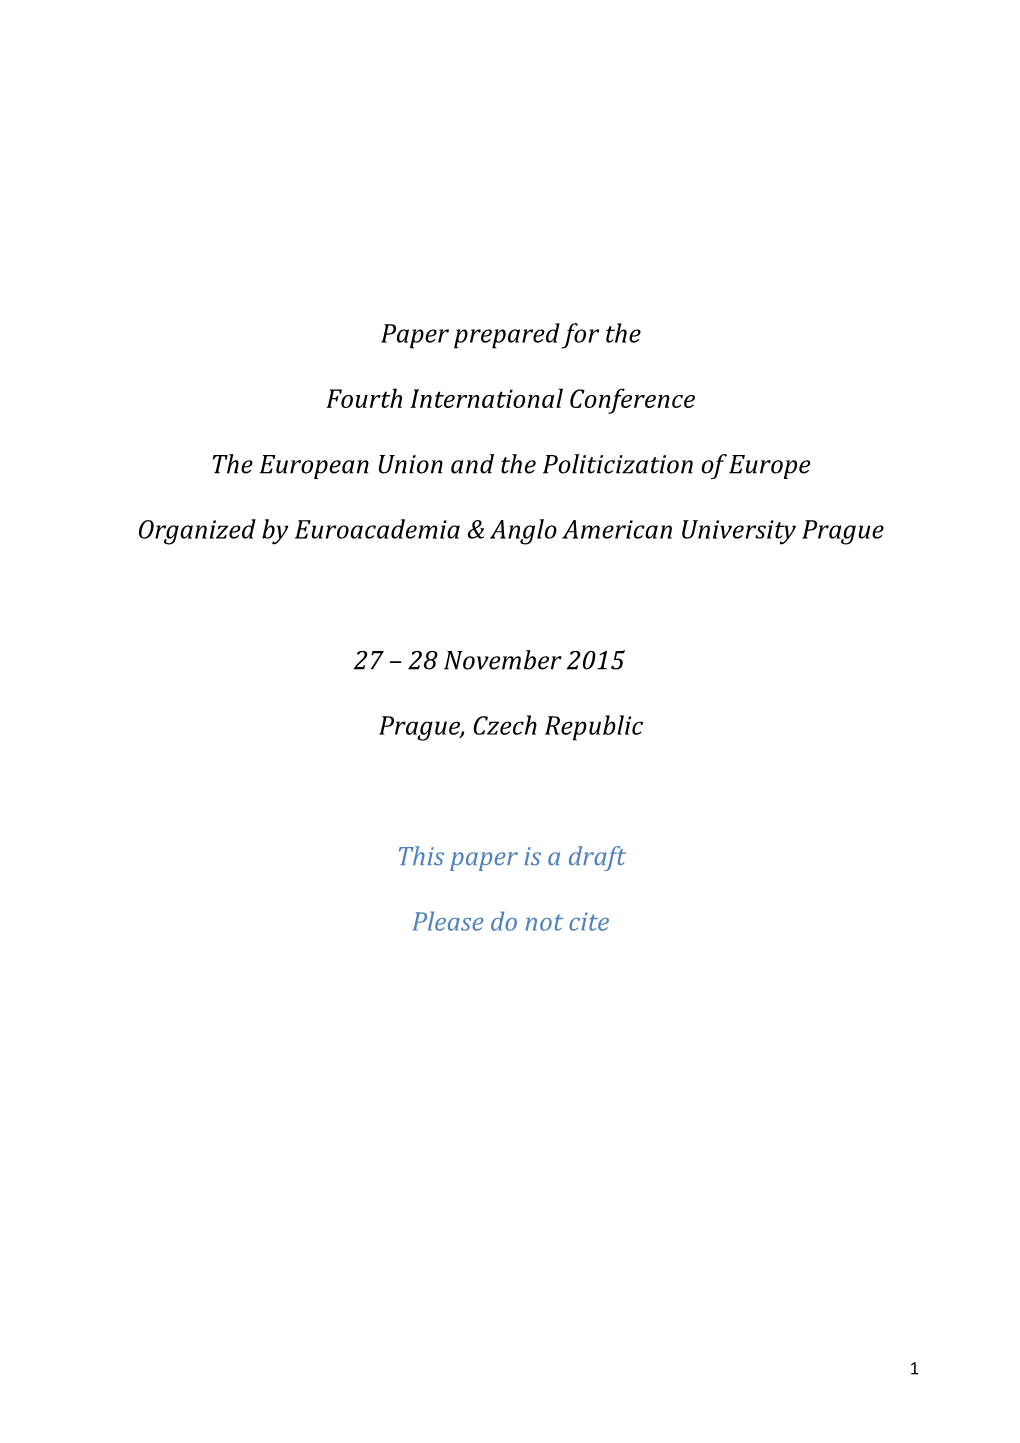 Reformation of Attitudes Towards the European Integration Assoc